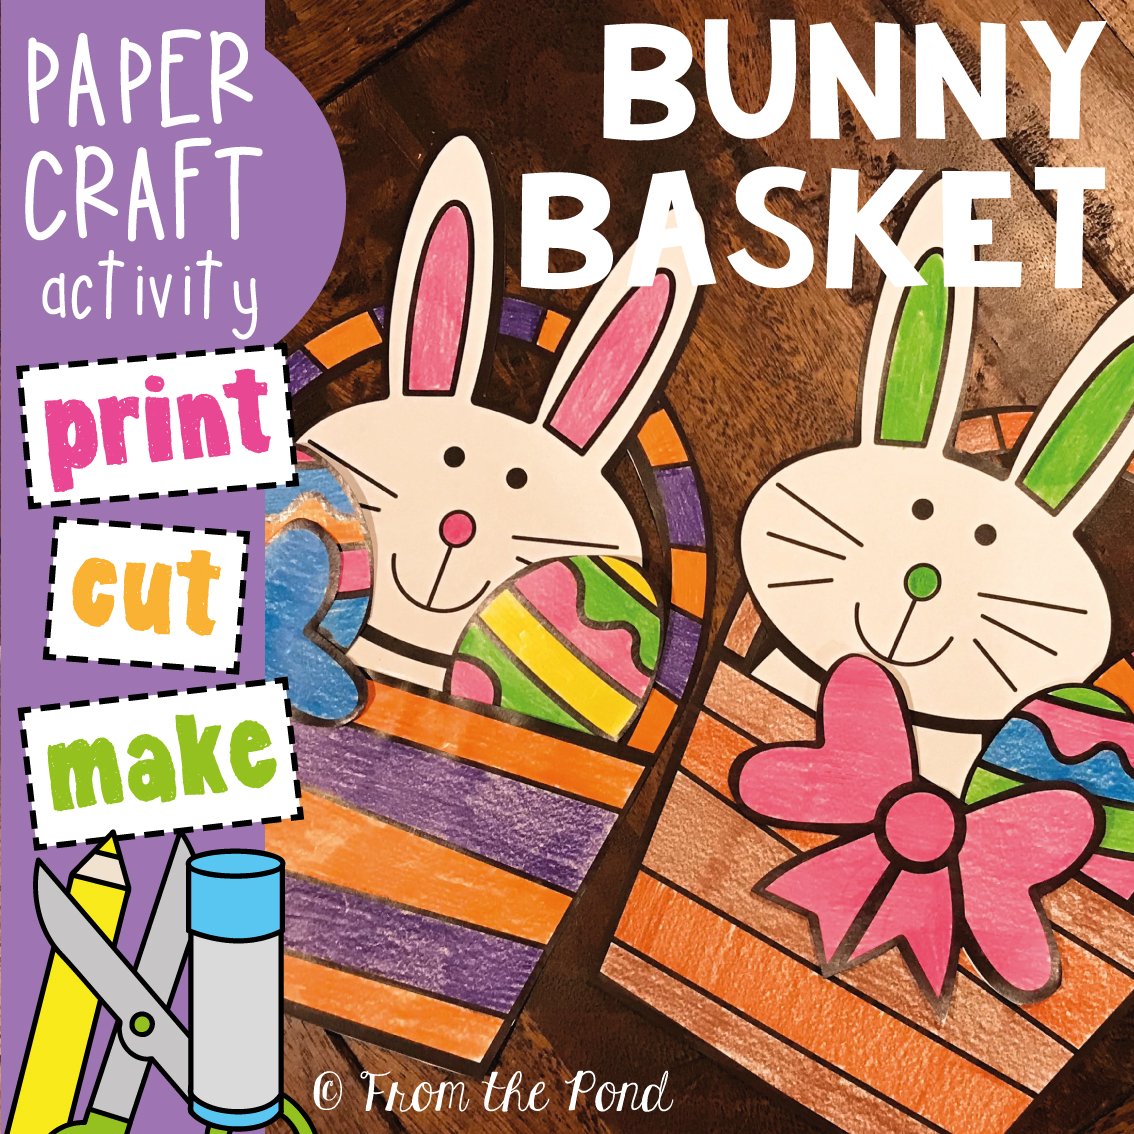 bunny-basket-craft-pic-01.jpg